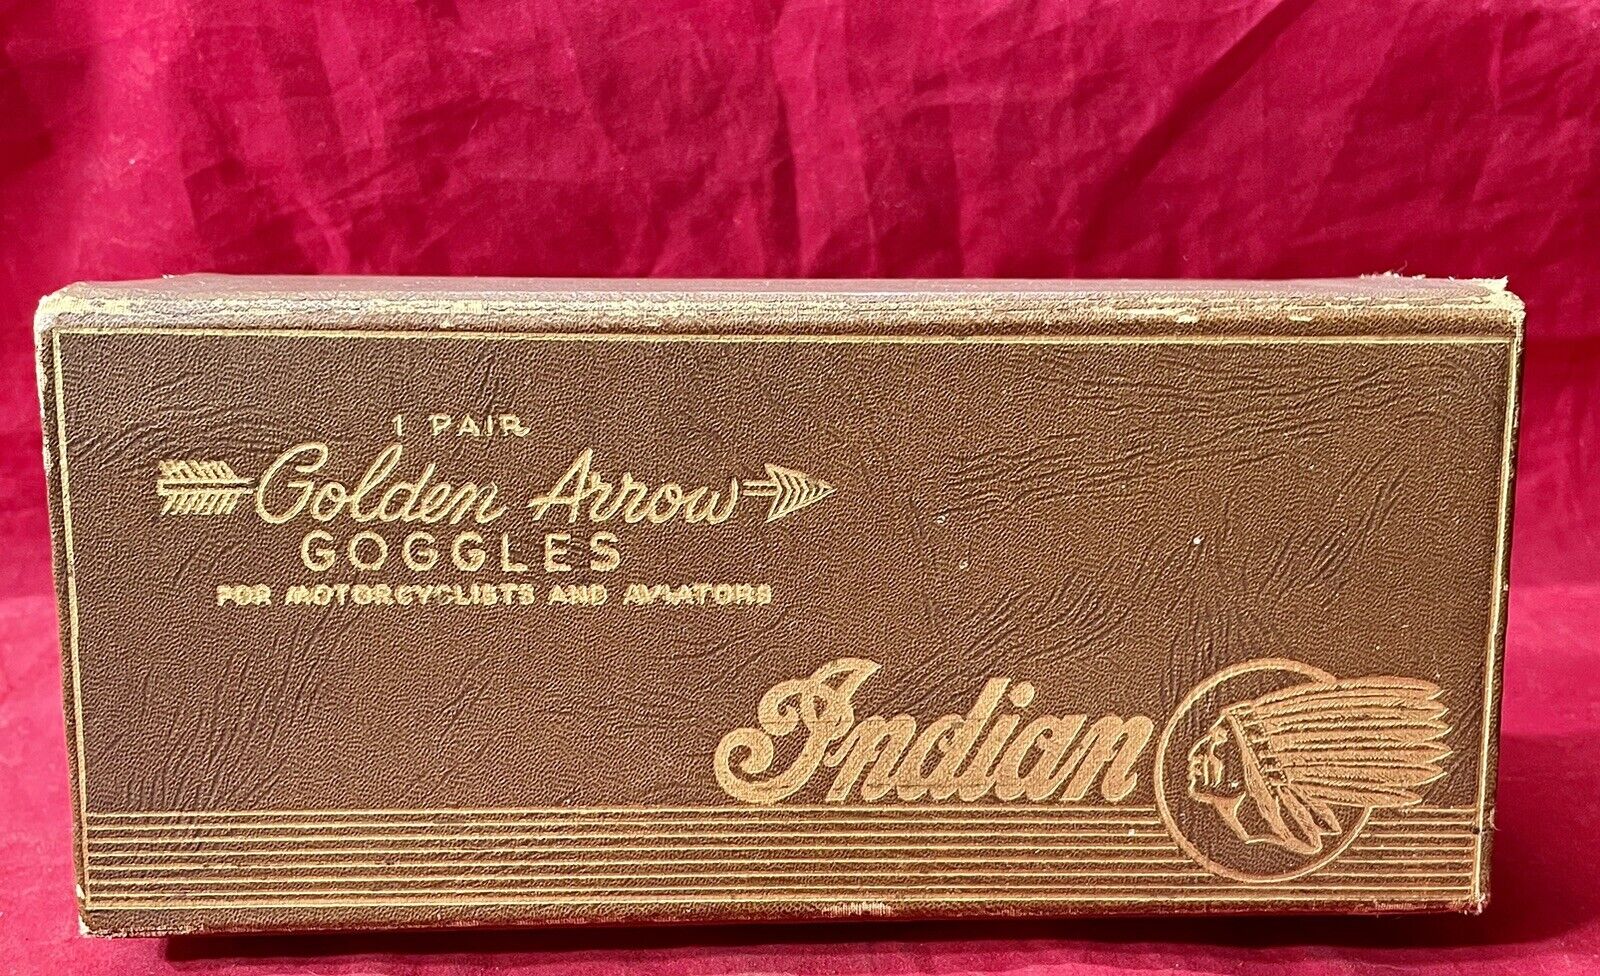 Vintage Indian Motorcycles Golden Arrow Goggles Box Ultra Rare EMPTY Collectible